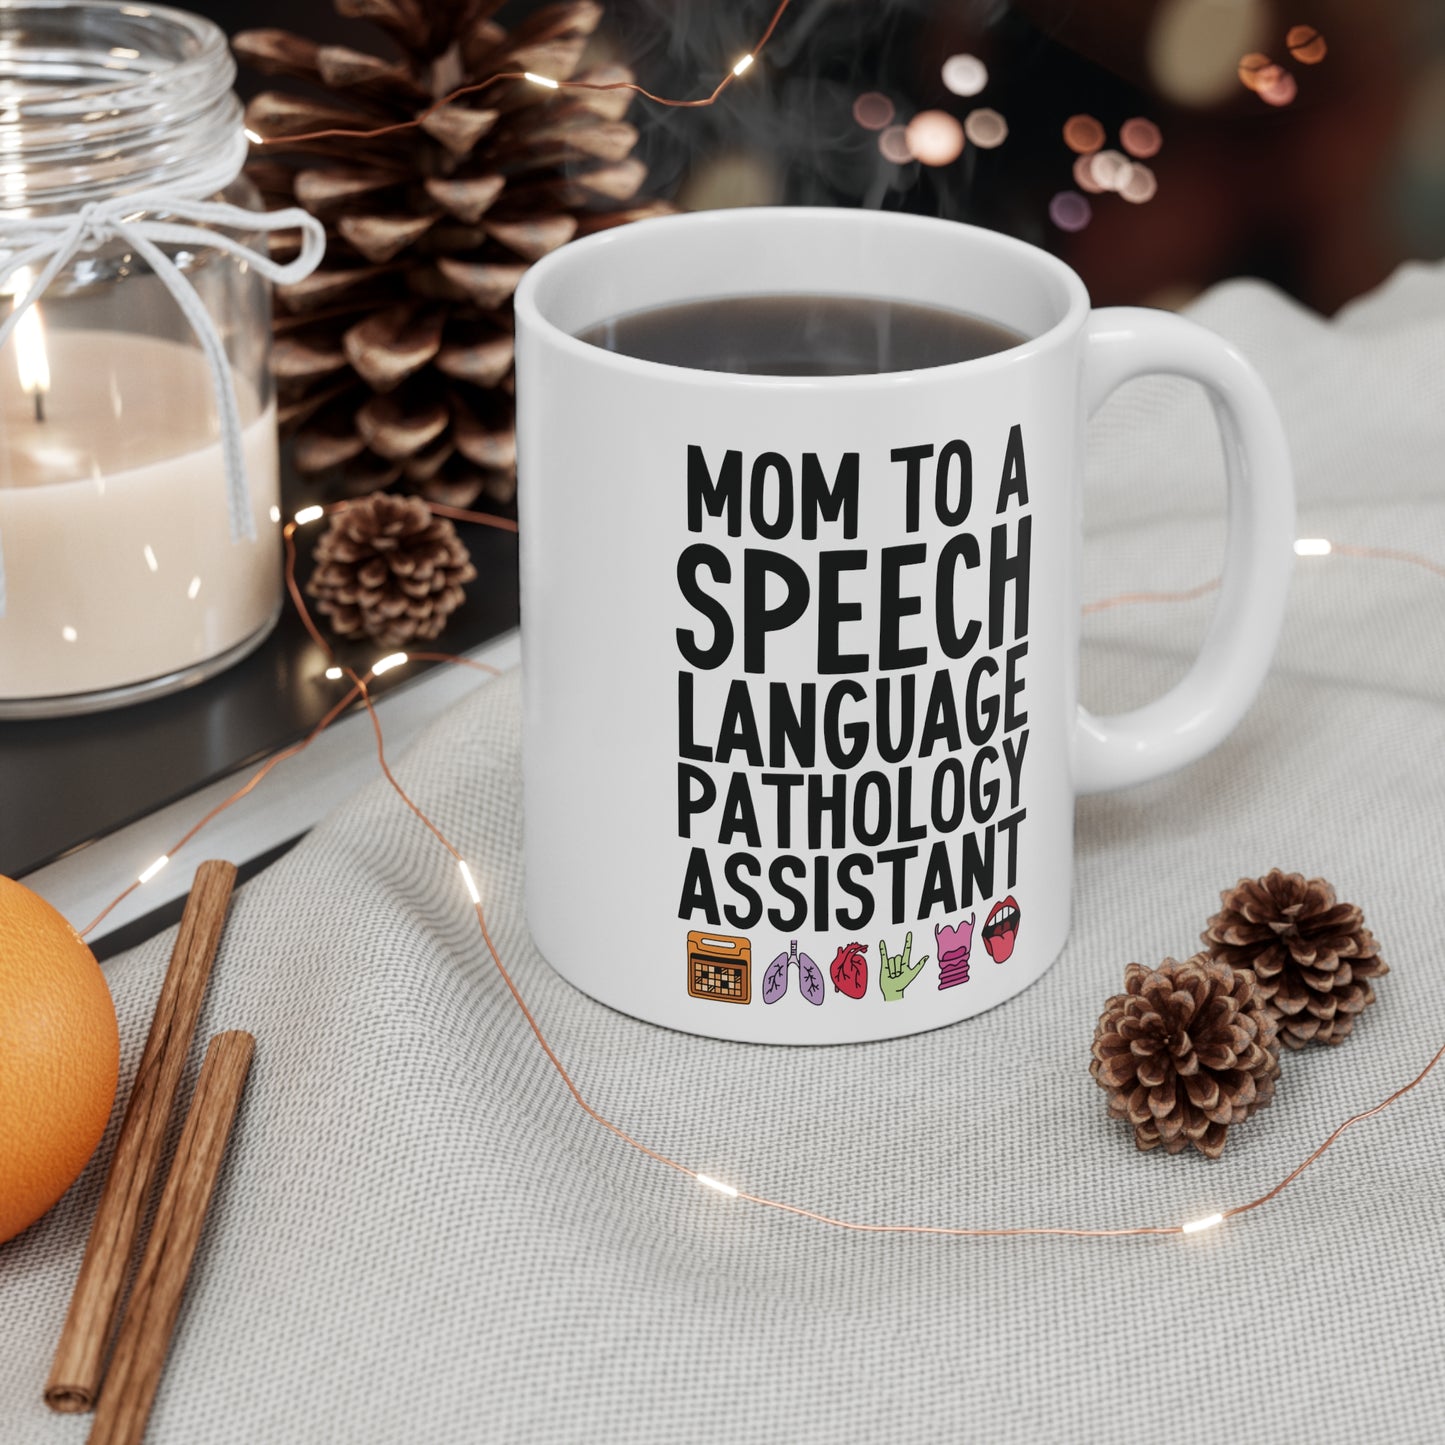 Mom to a Speech Language Pathology Assistant (SLPA) Mug